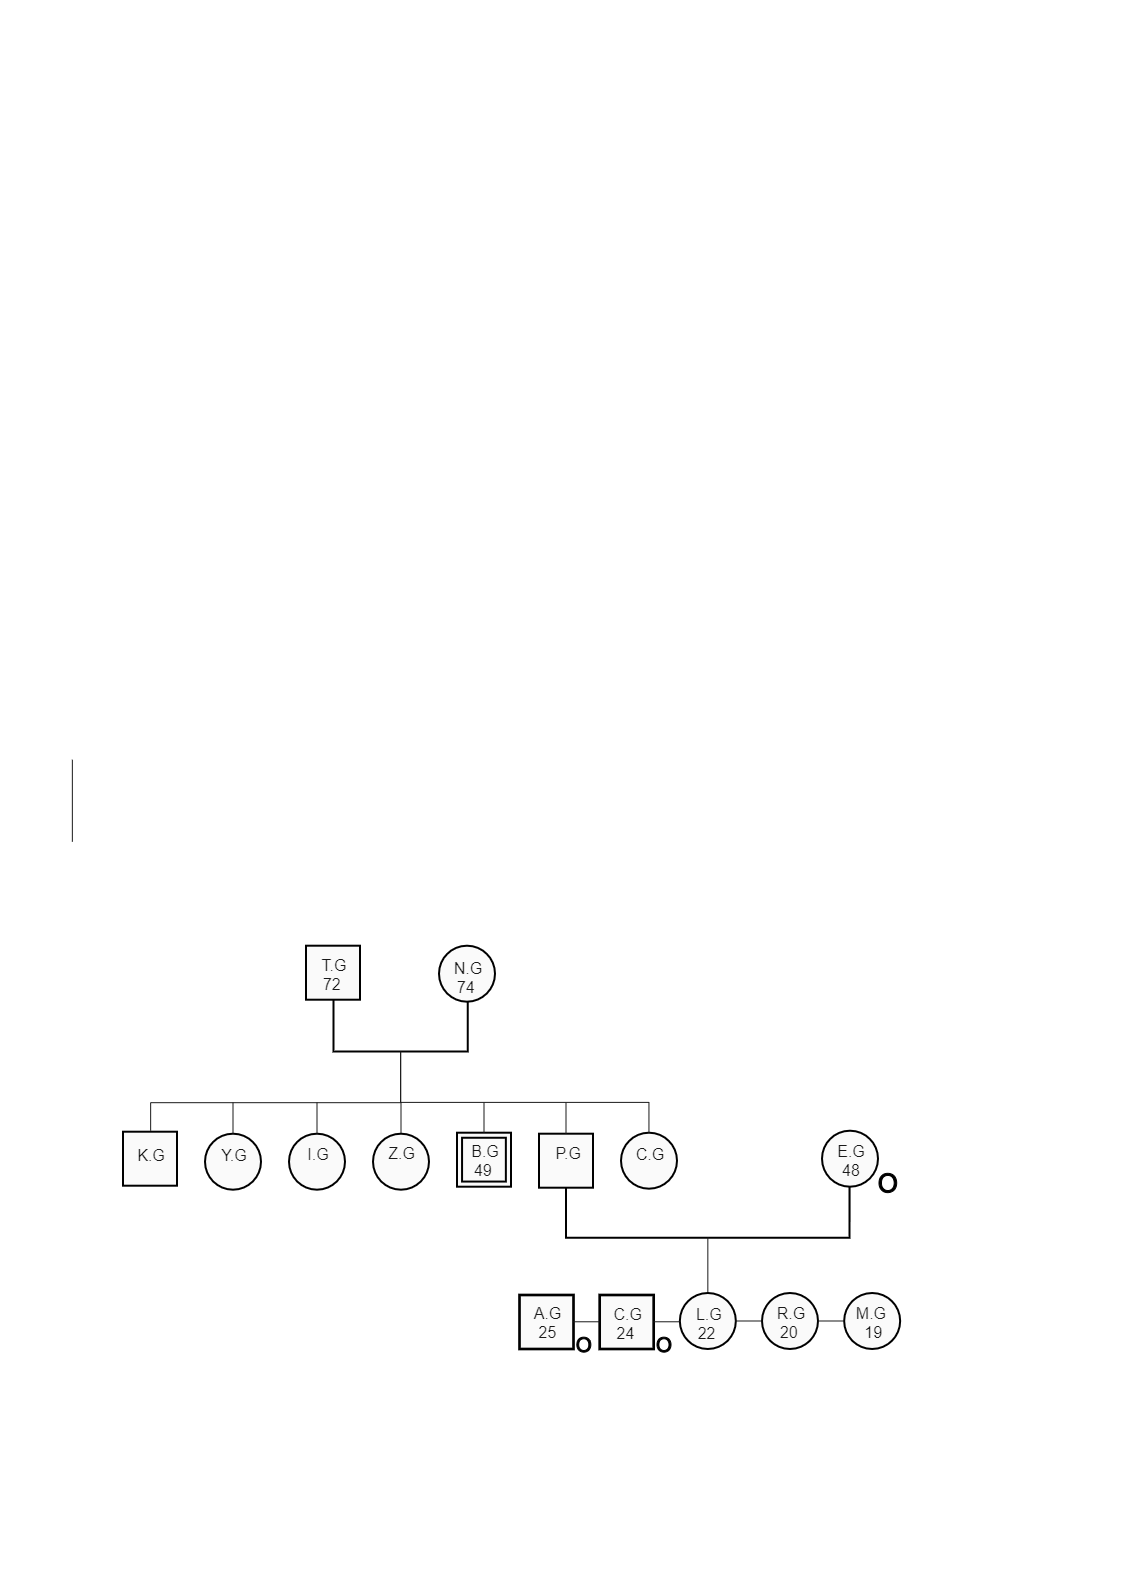 Ideal Family Relationship Tree Representation Diagram